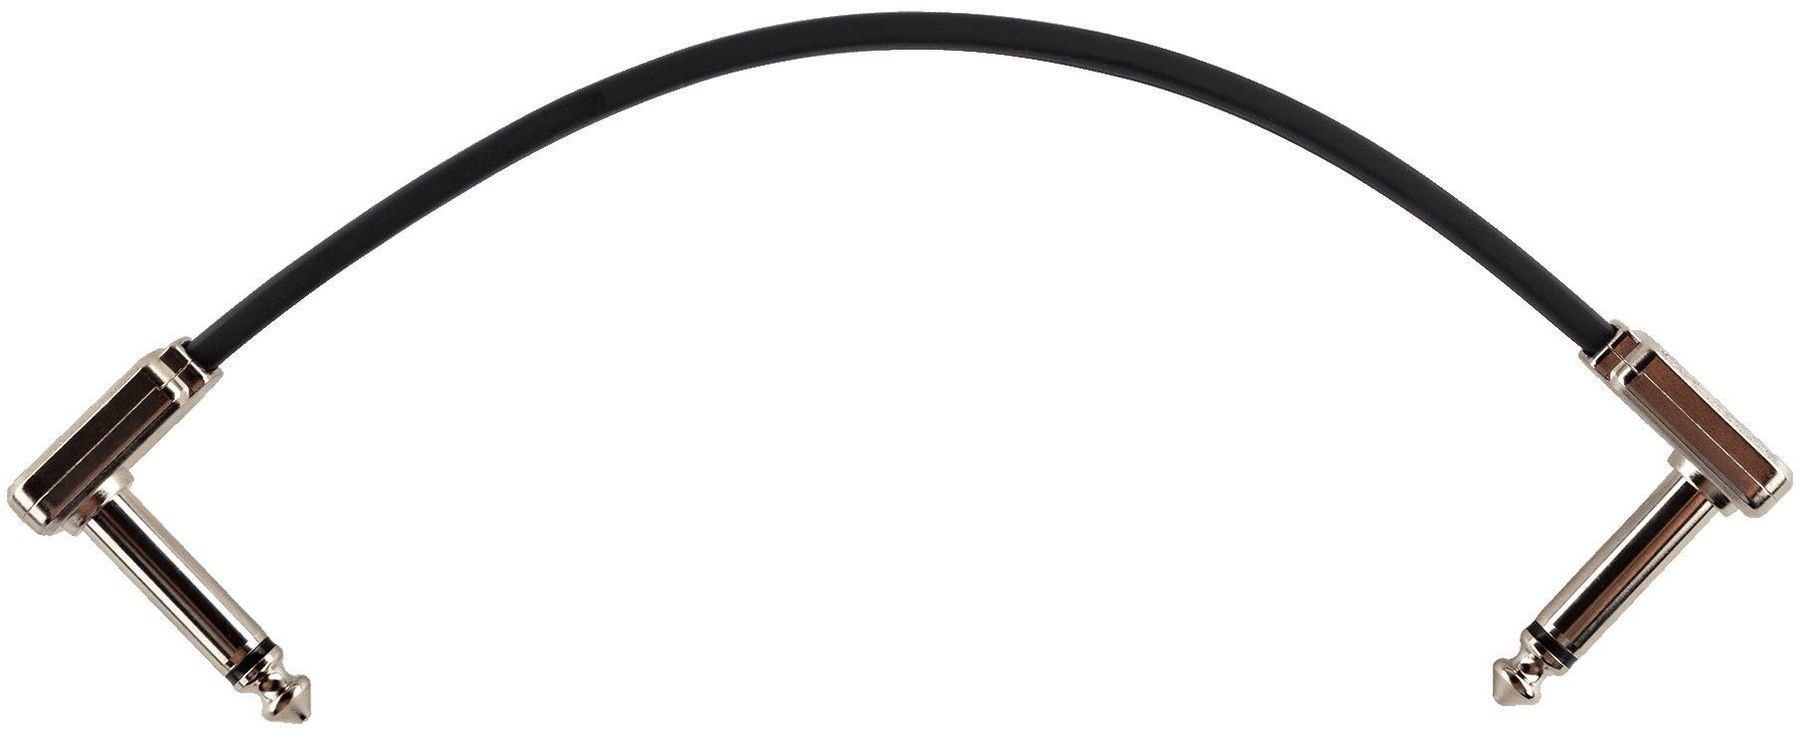 Câble de patch Ernie Ball P06226 Noir 15 cm Angle - Angle